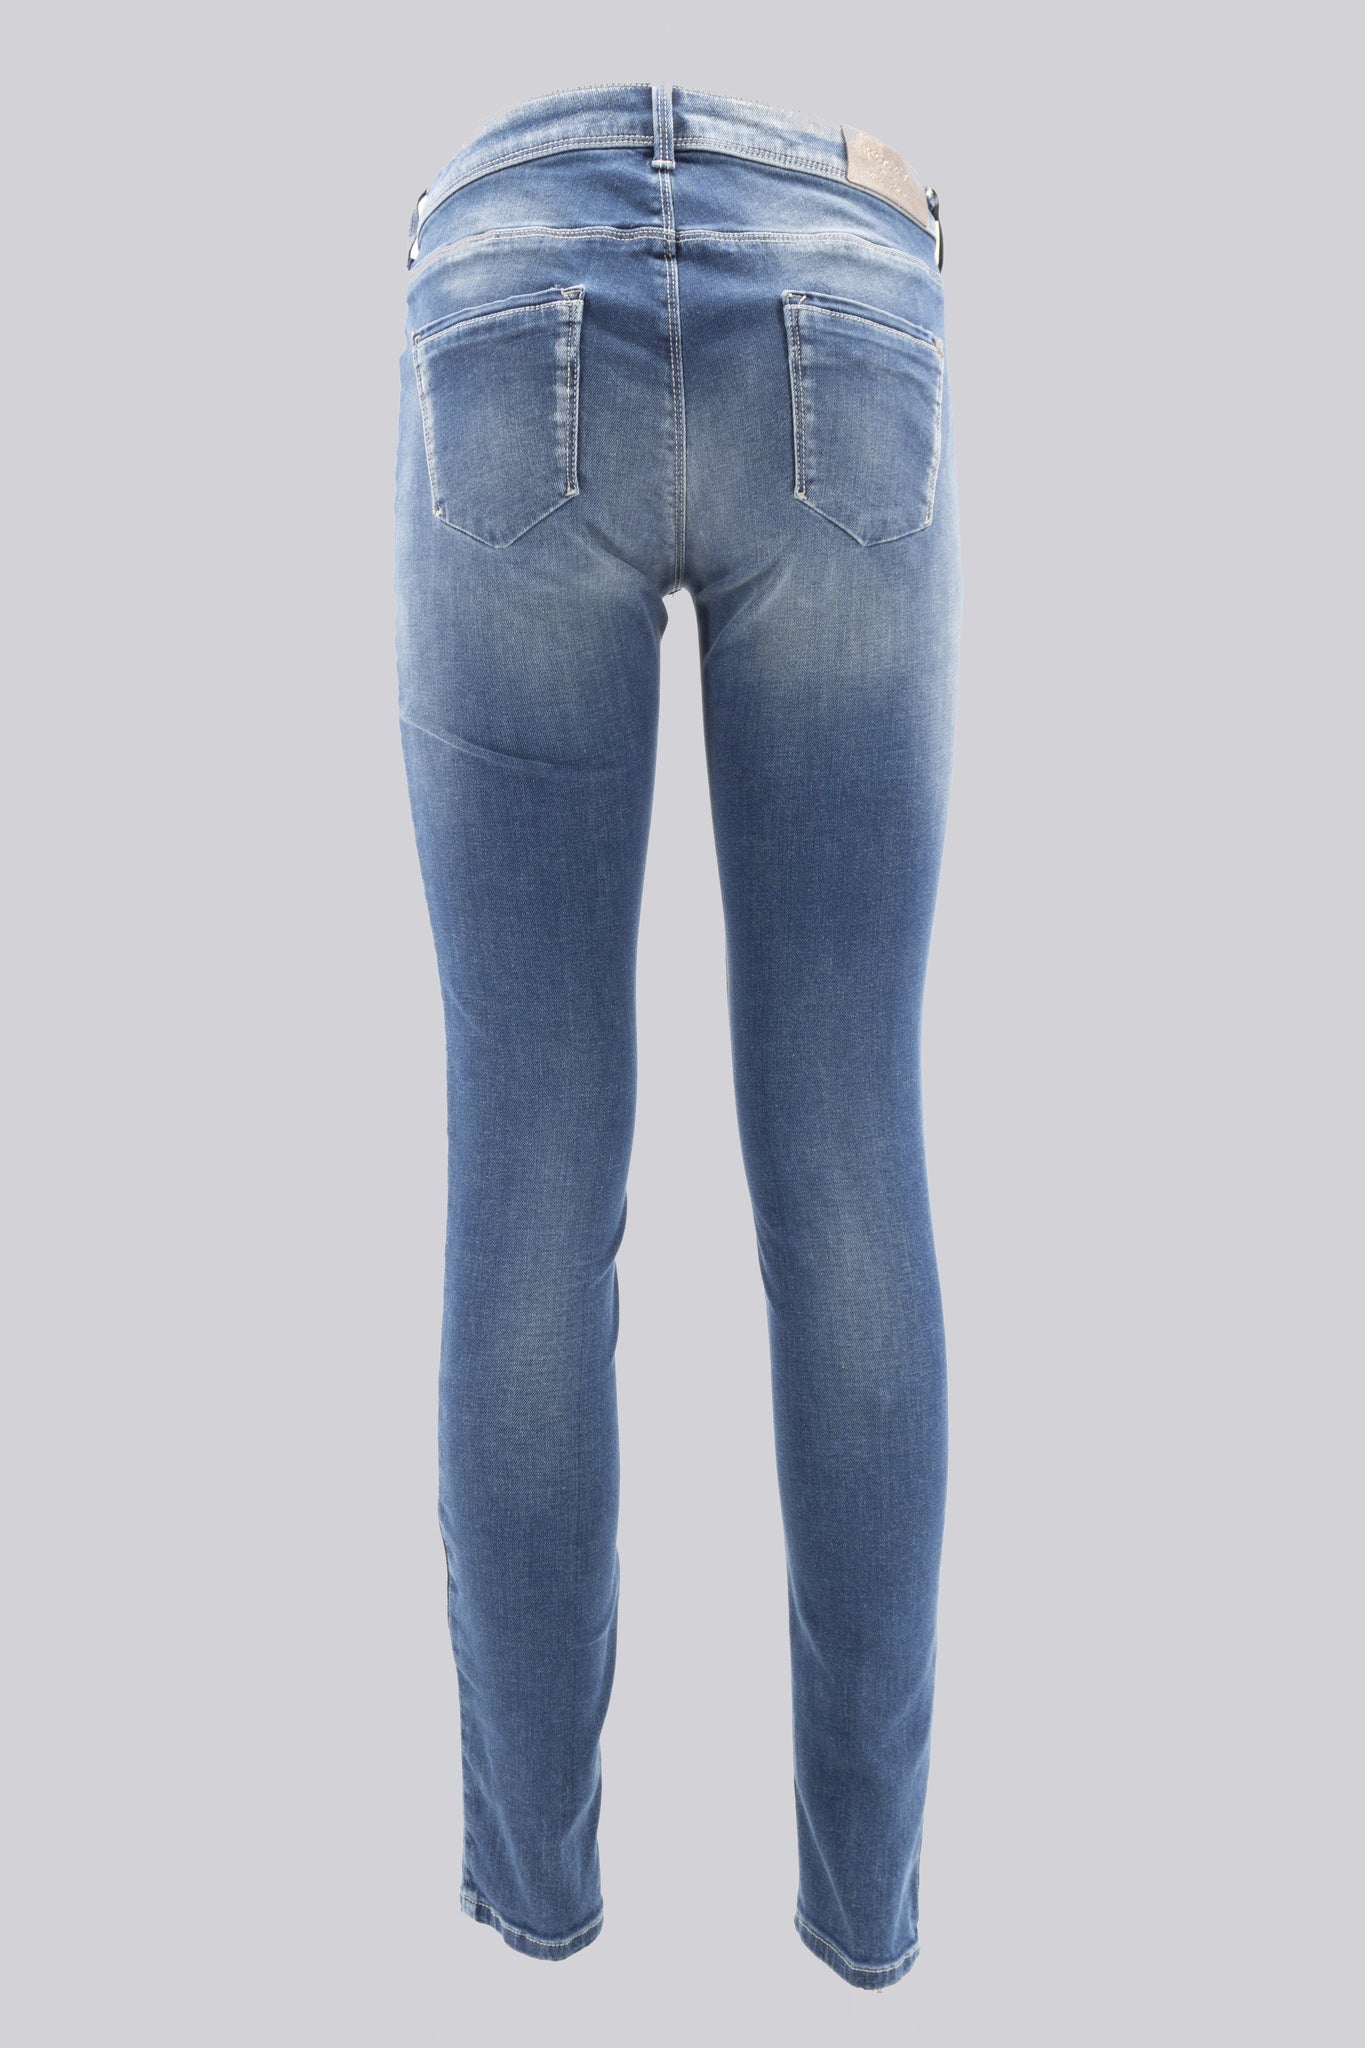 Jeans Modello Skinny / Jeans - Ideal Moda